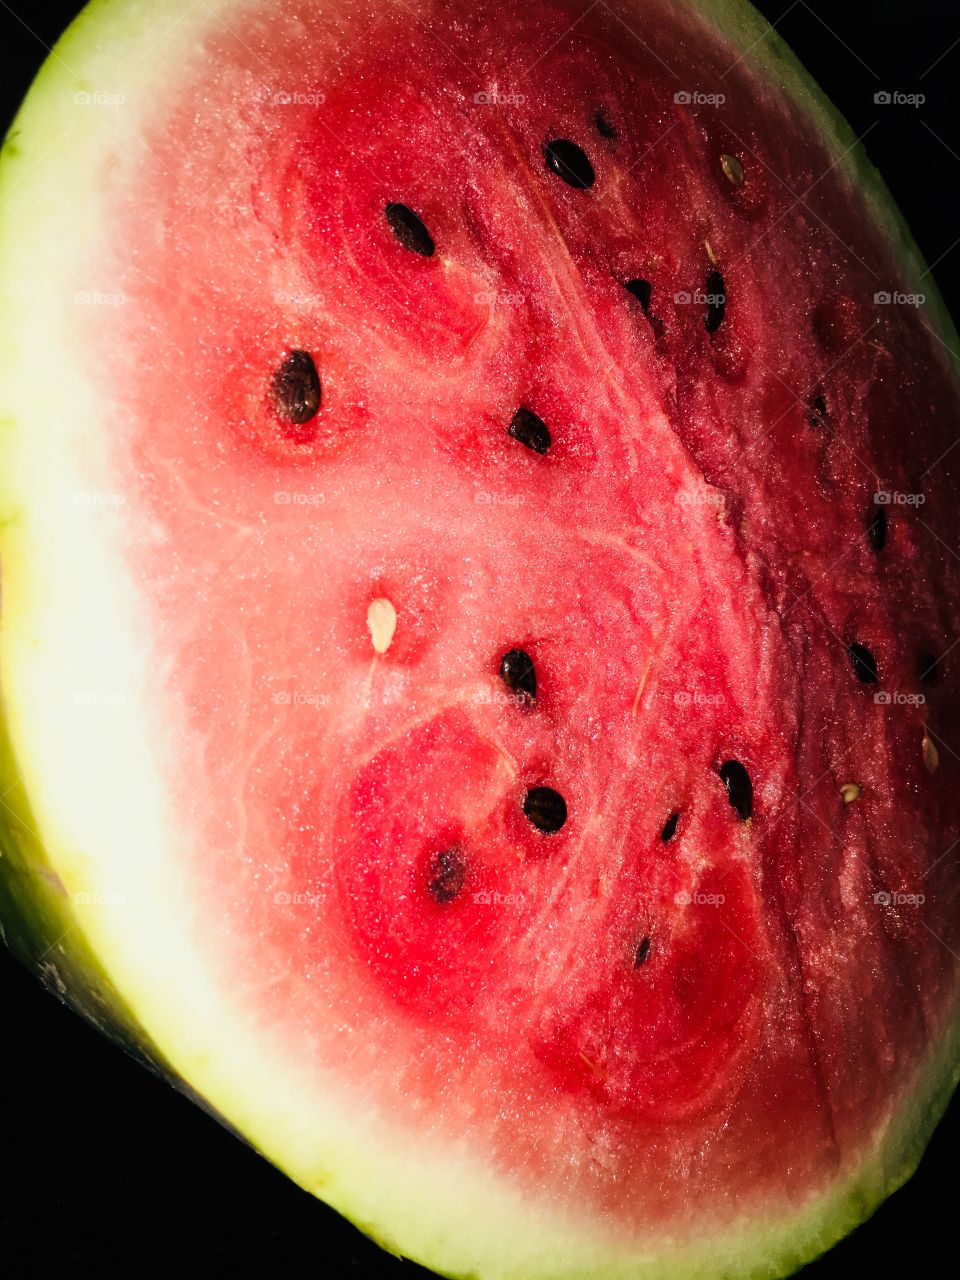 #VERY wonderful watermelon# that is very yummy